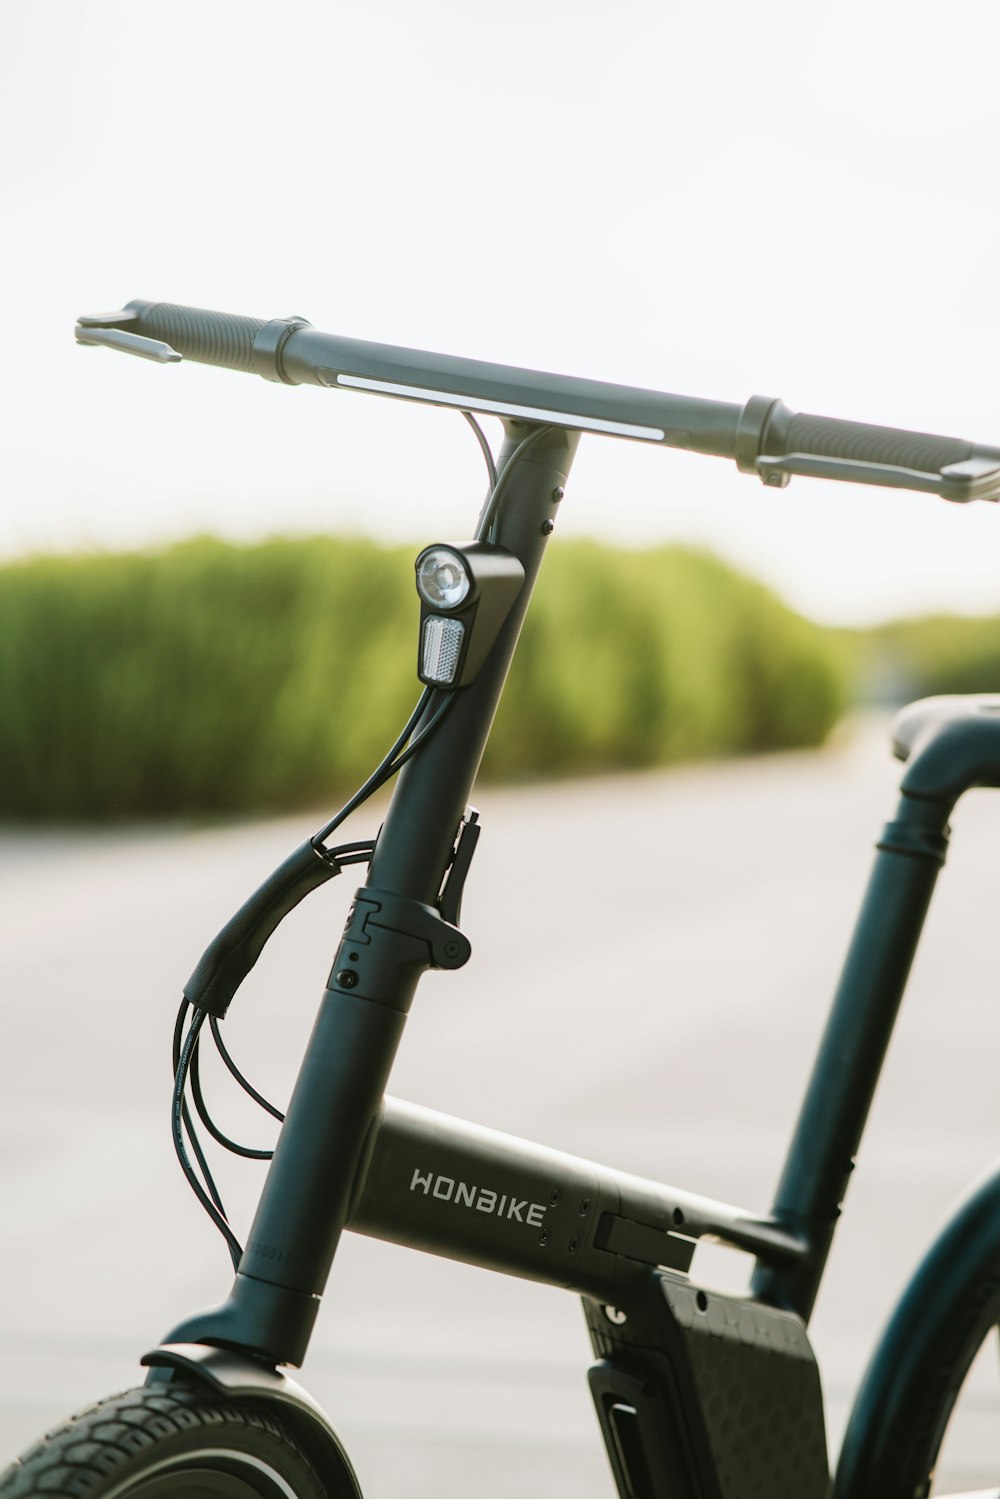 a close-up of a bicycle handlebars